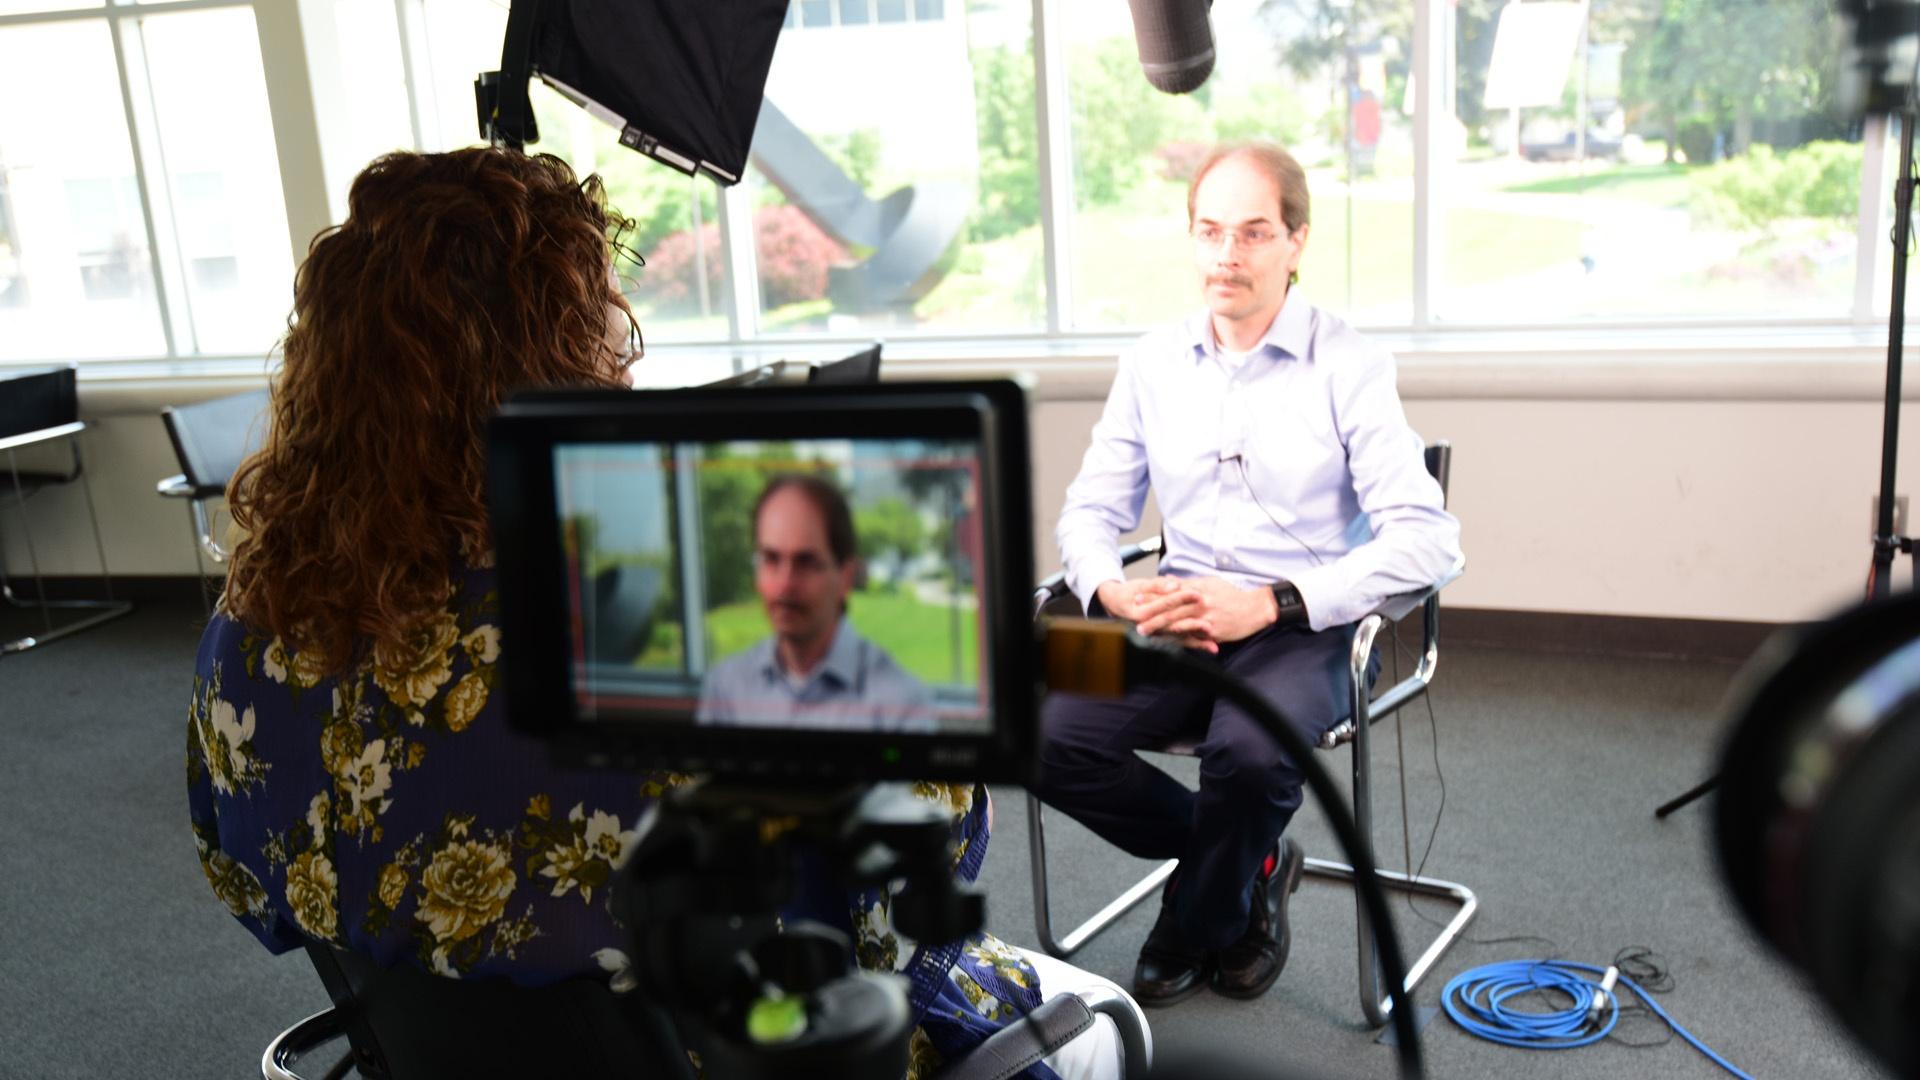 Community filmmaker Paul Dobbs being interviewed by WNED-TV